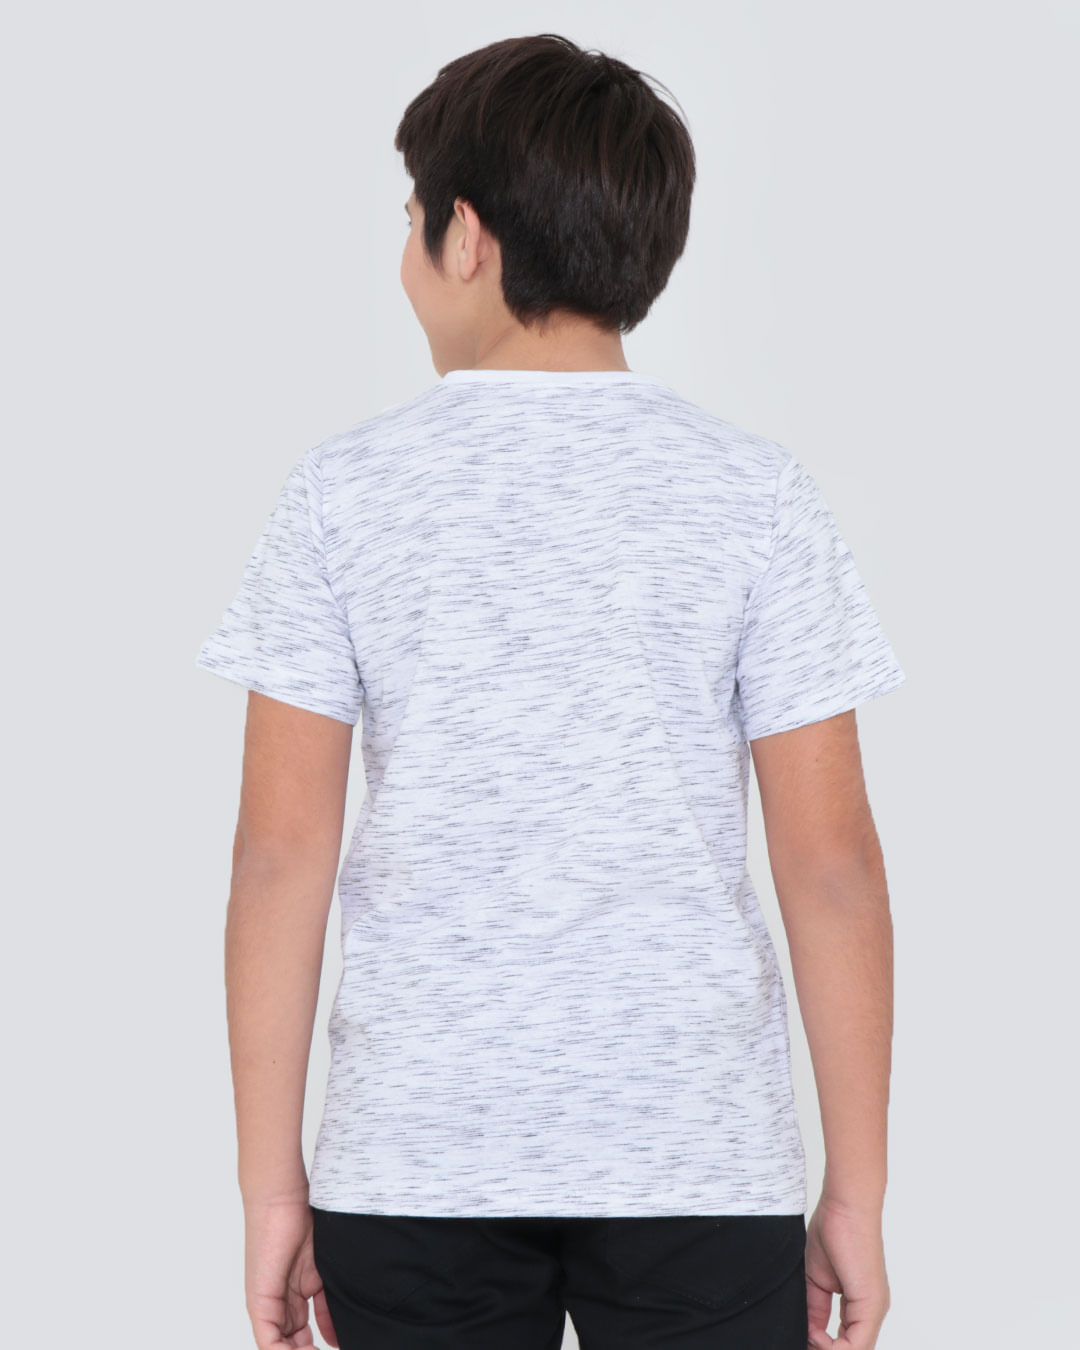 Camiseta-Juvenil-Manga-Curta-Recorte-Tela-Flame-Branca